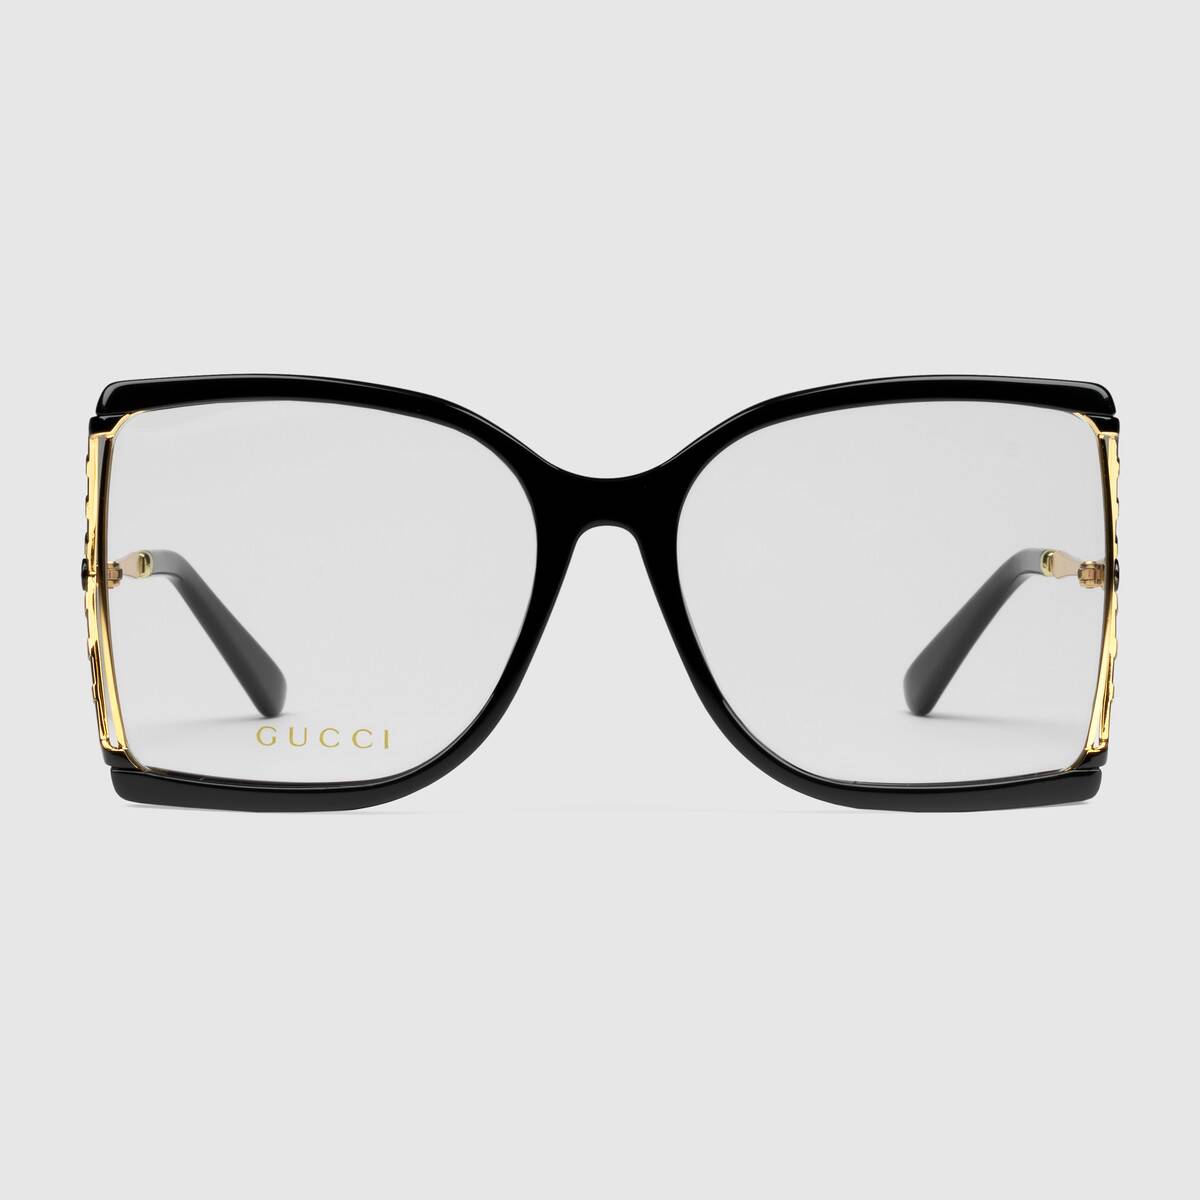 gucci new glasses 2019